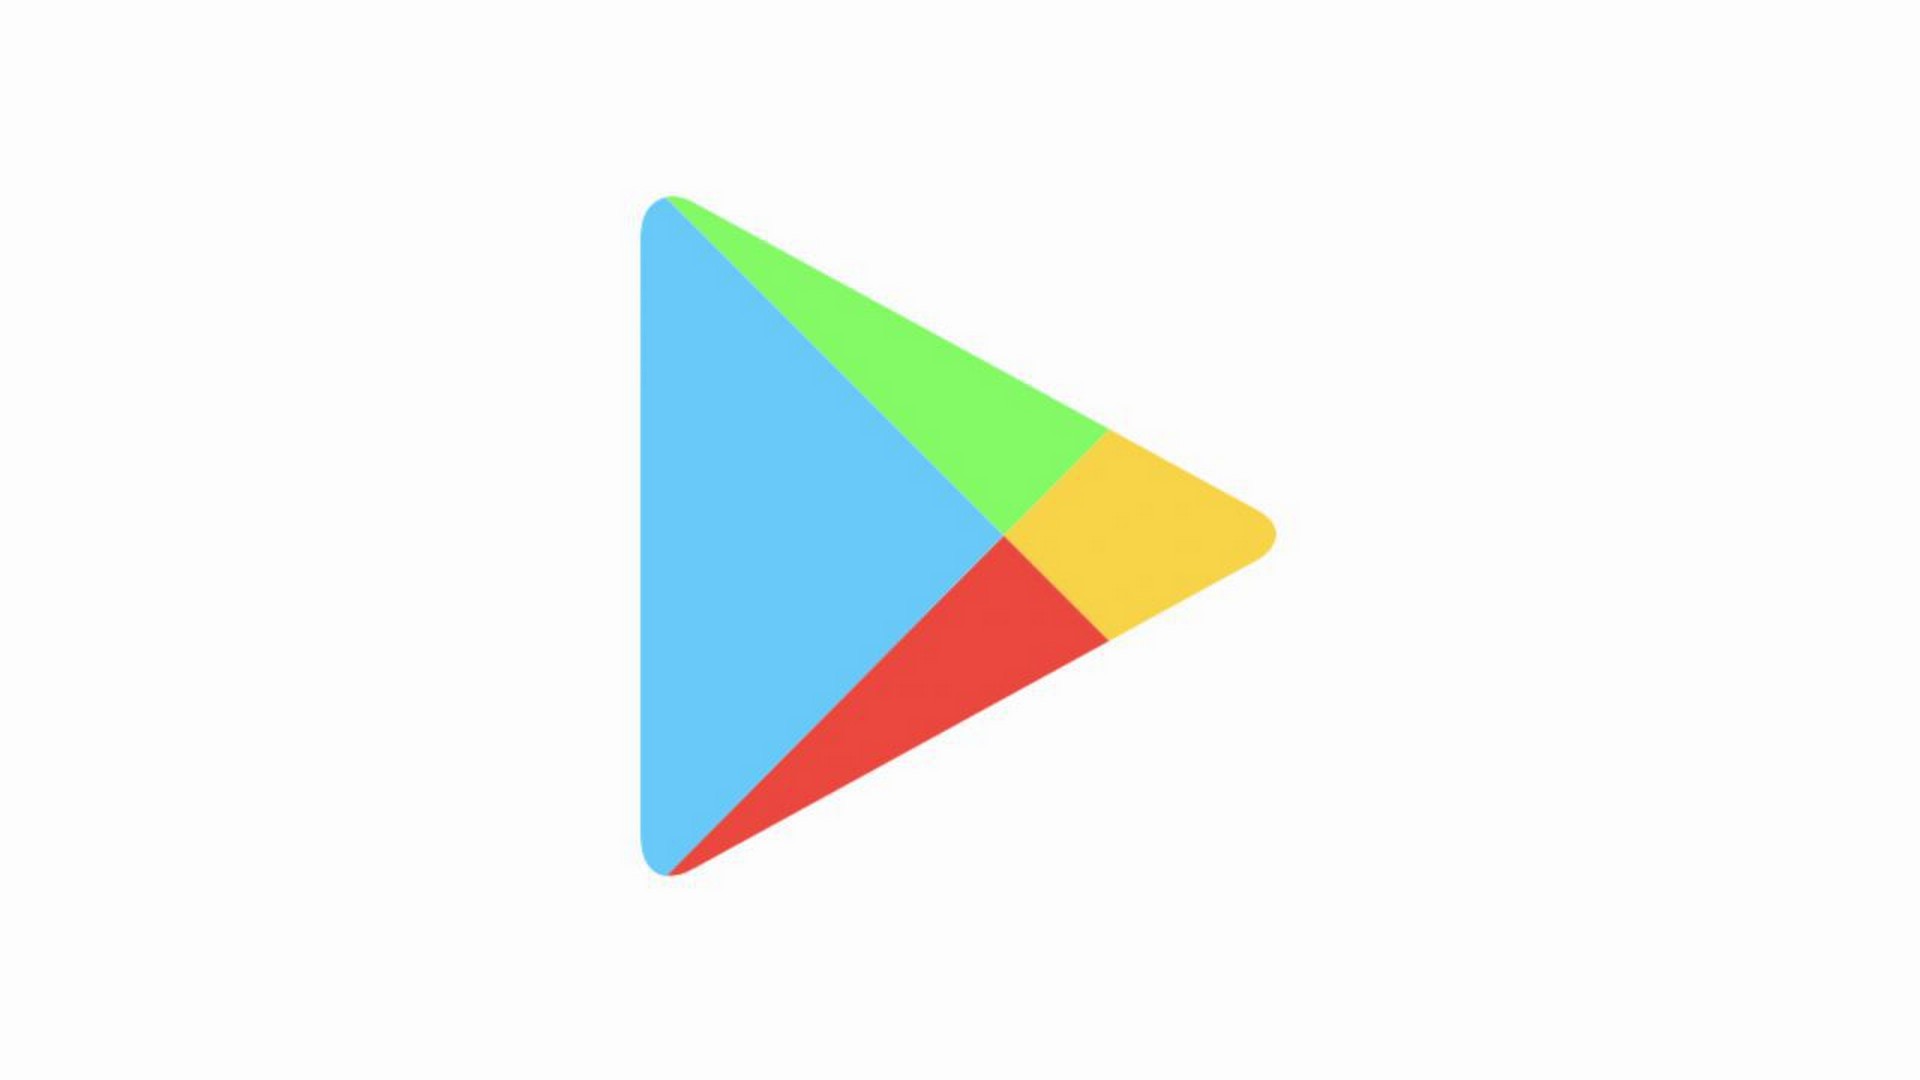 google play store app download apk mirror